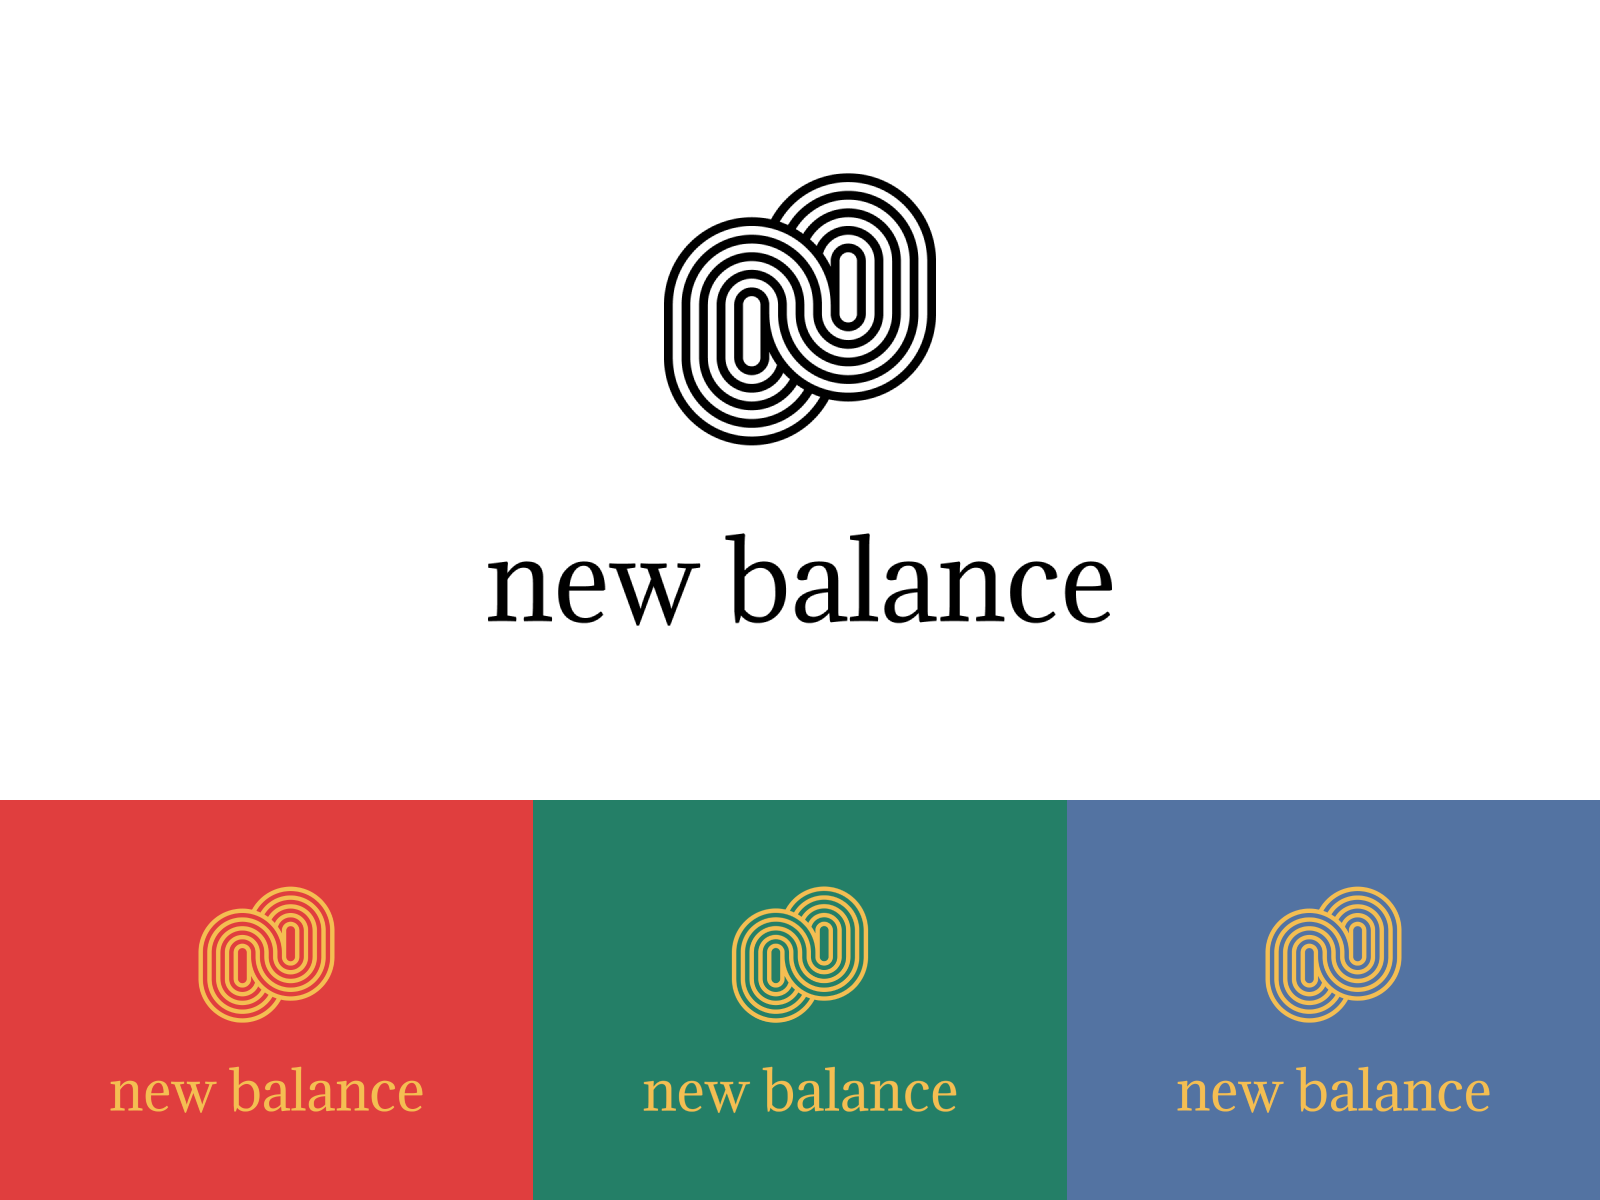 Balance logo Vectors & Illustrations for Free Download | Freepik